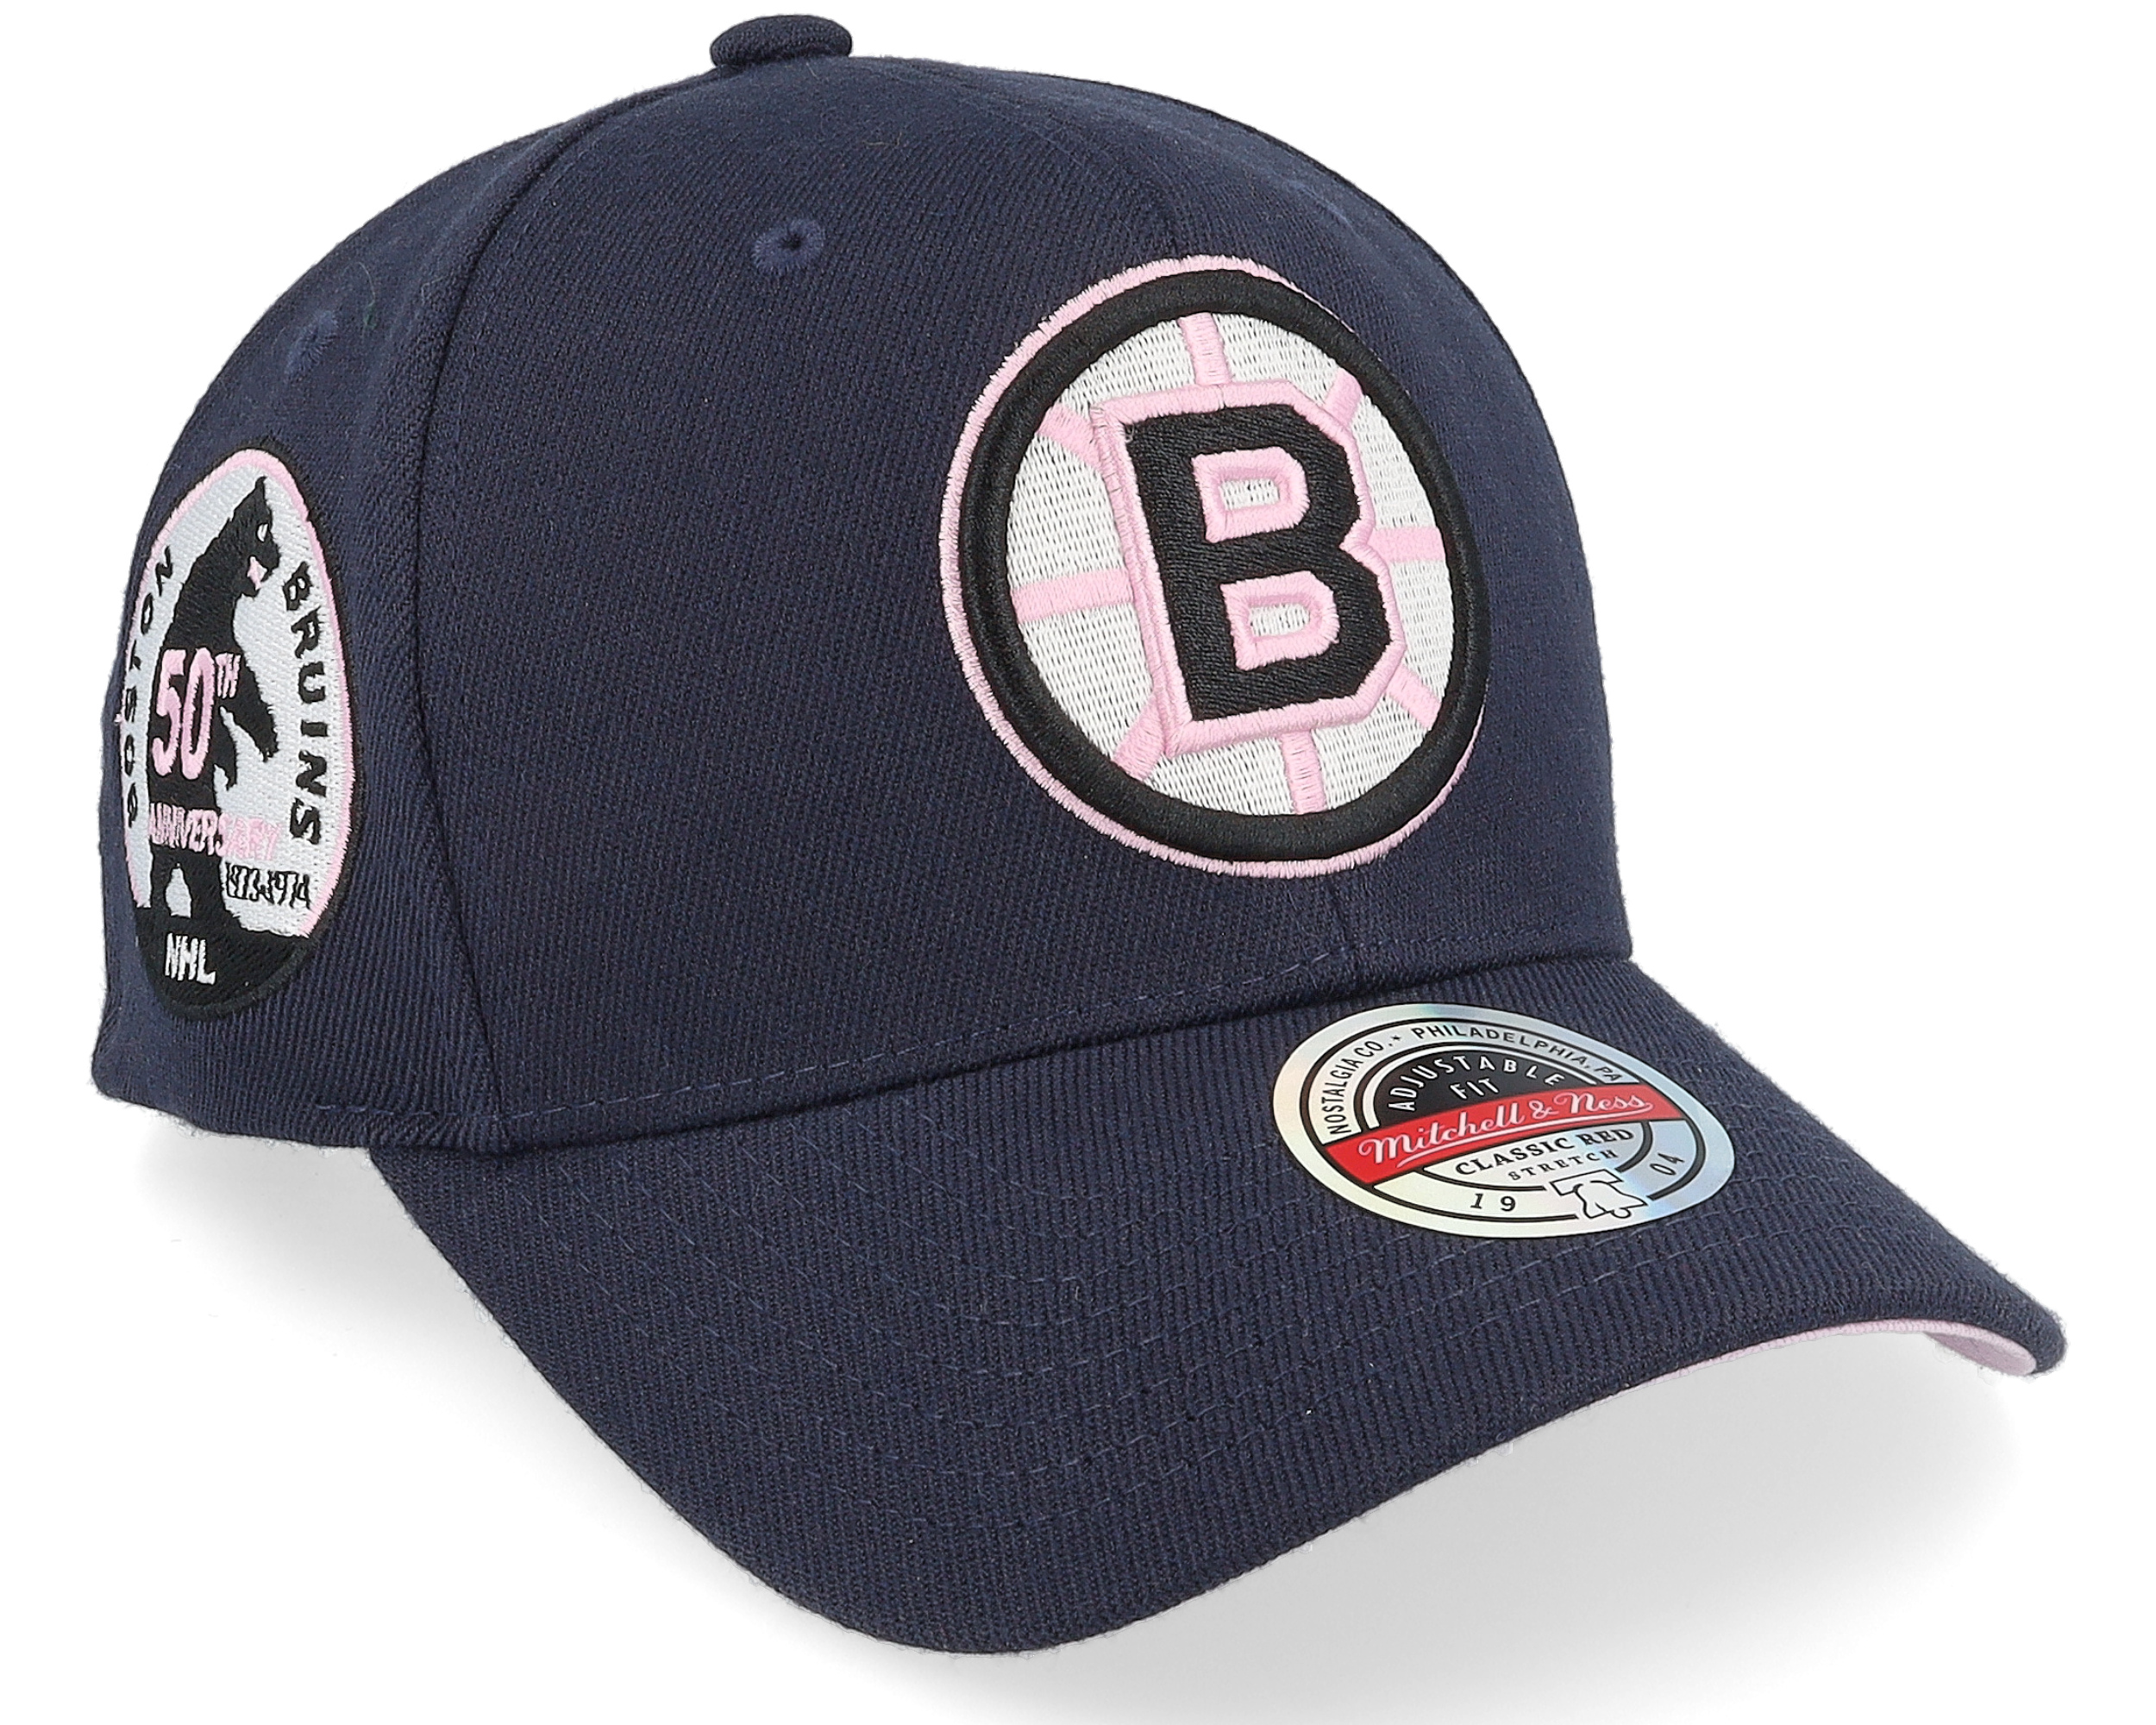 New Licensed NHL Zephyr Boston Bruins RETRO Classic Adjustable Hat B50